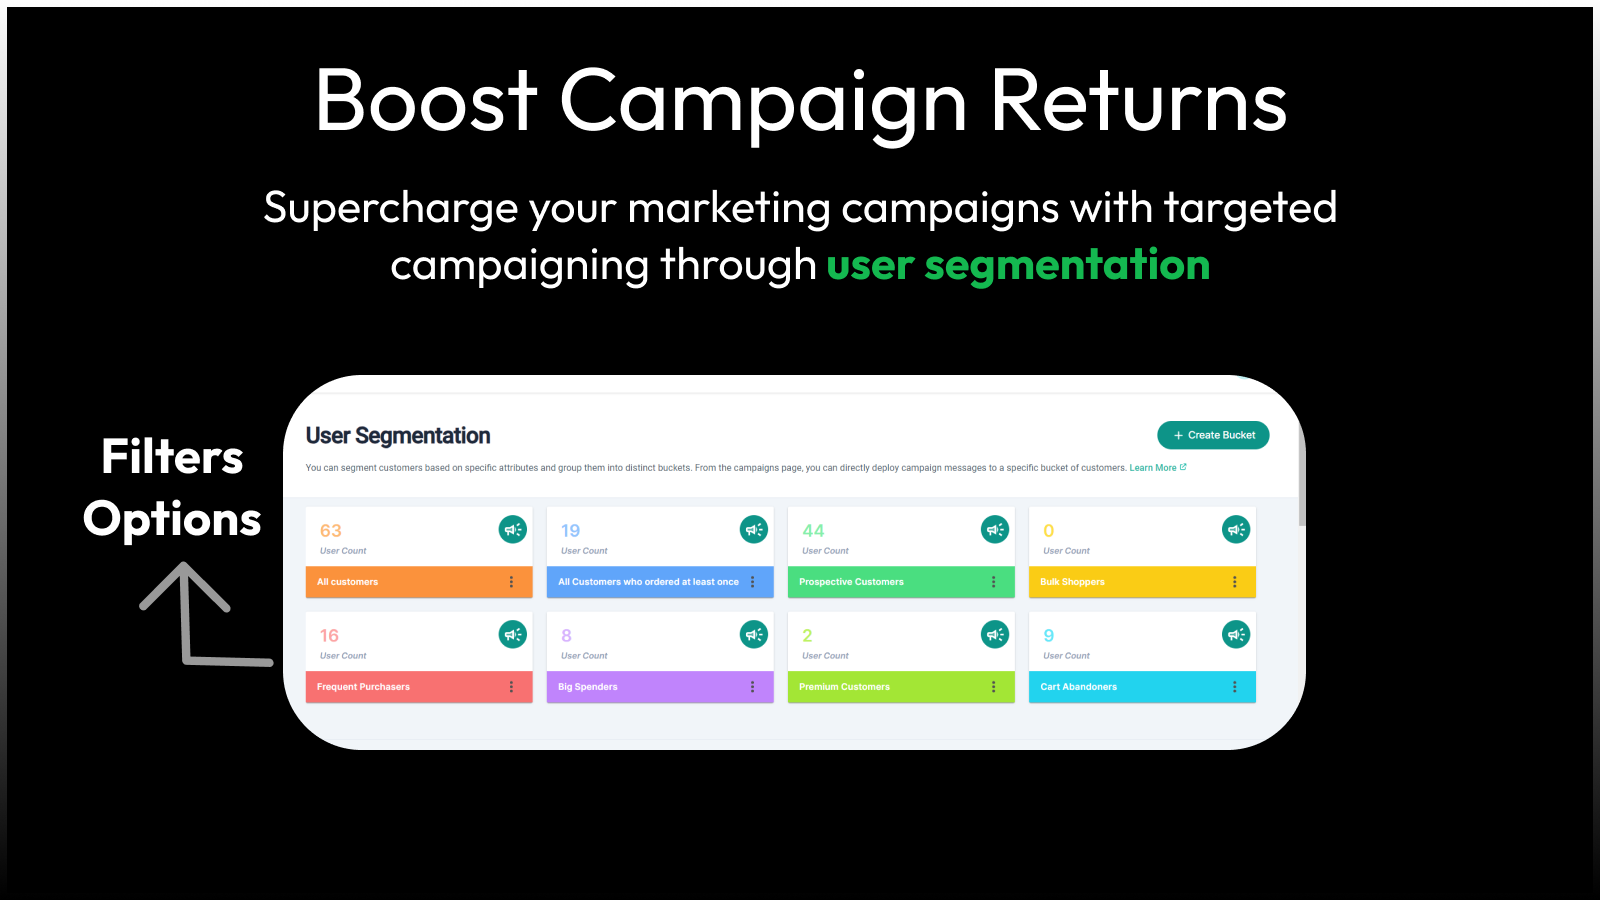 Targeted campaigns through User Segmentation